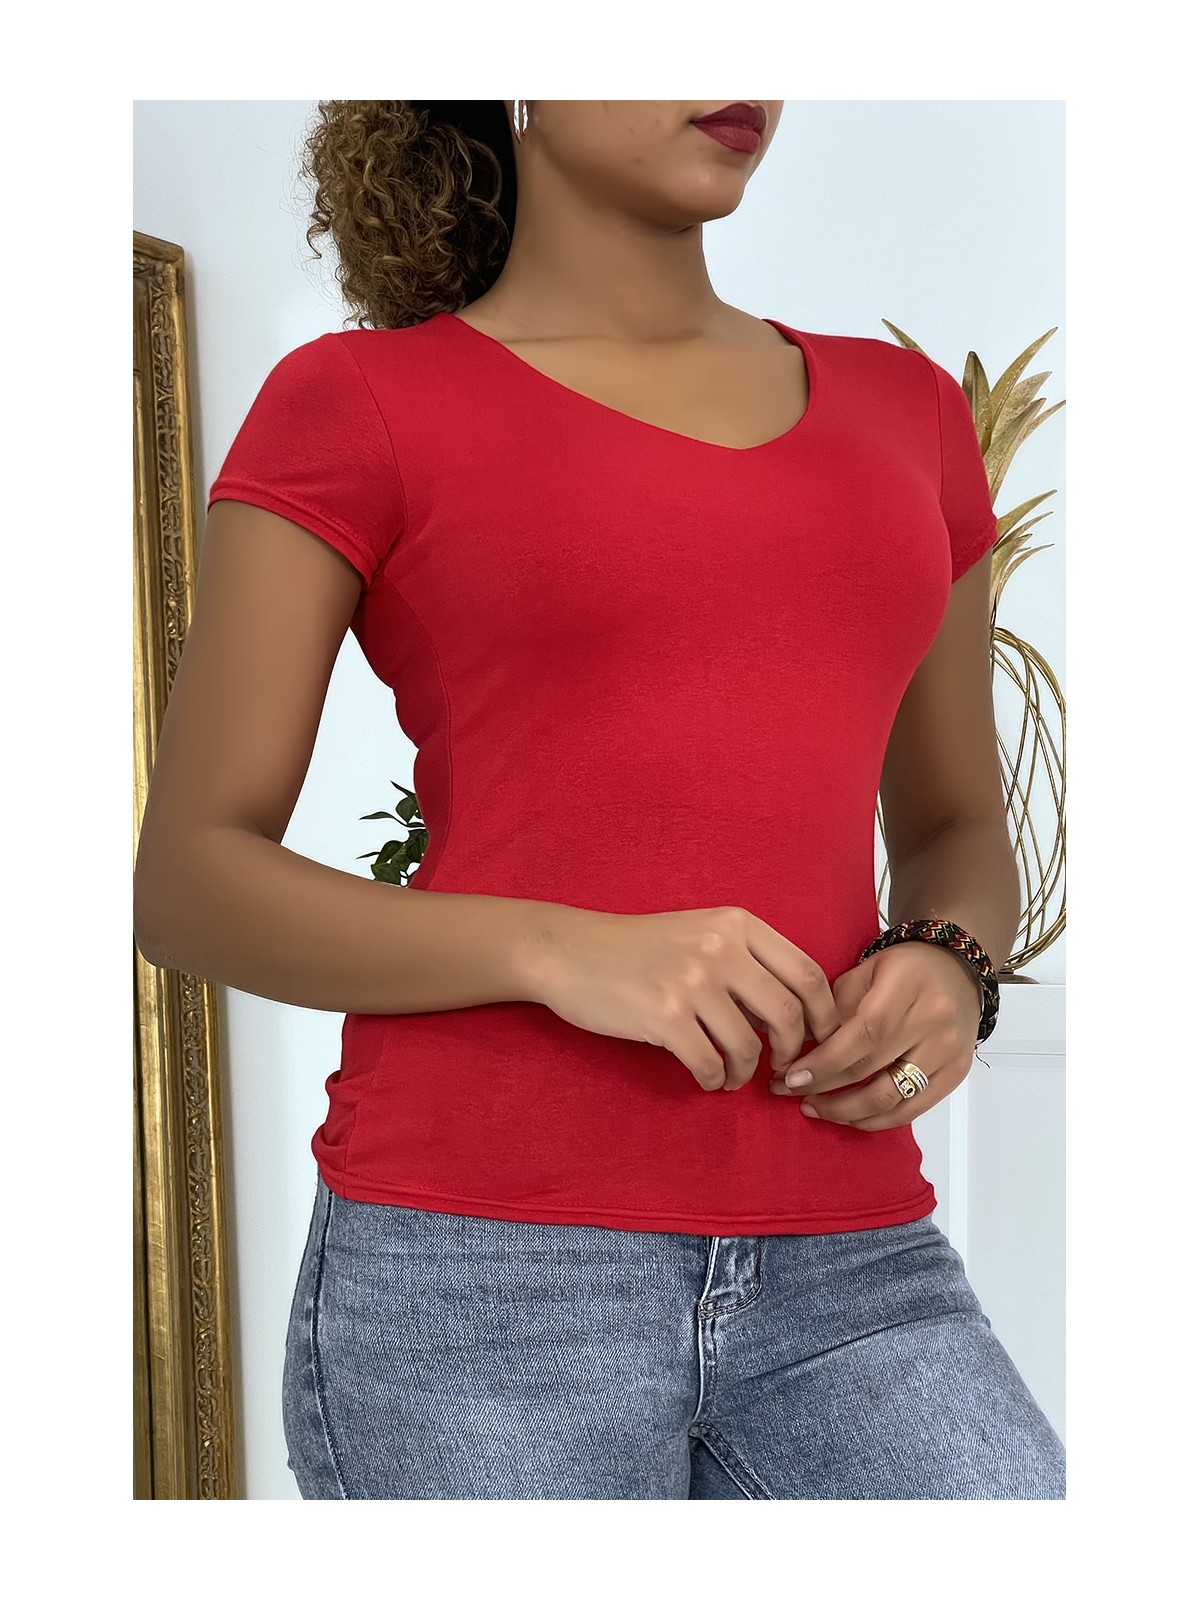 T-shirt rouge femme - 2